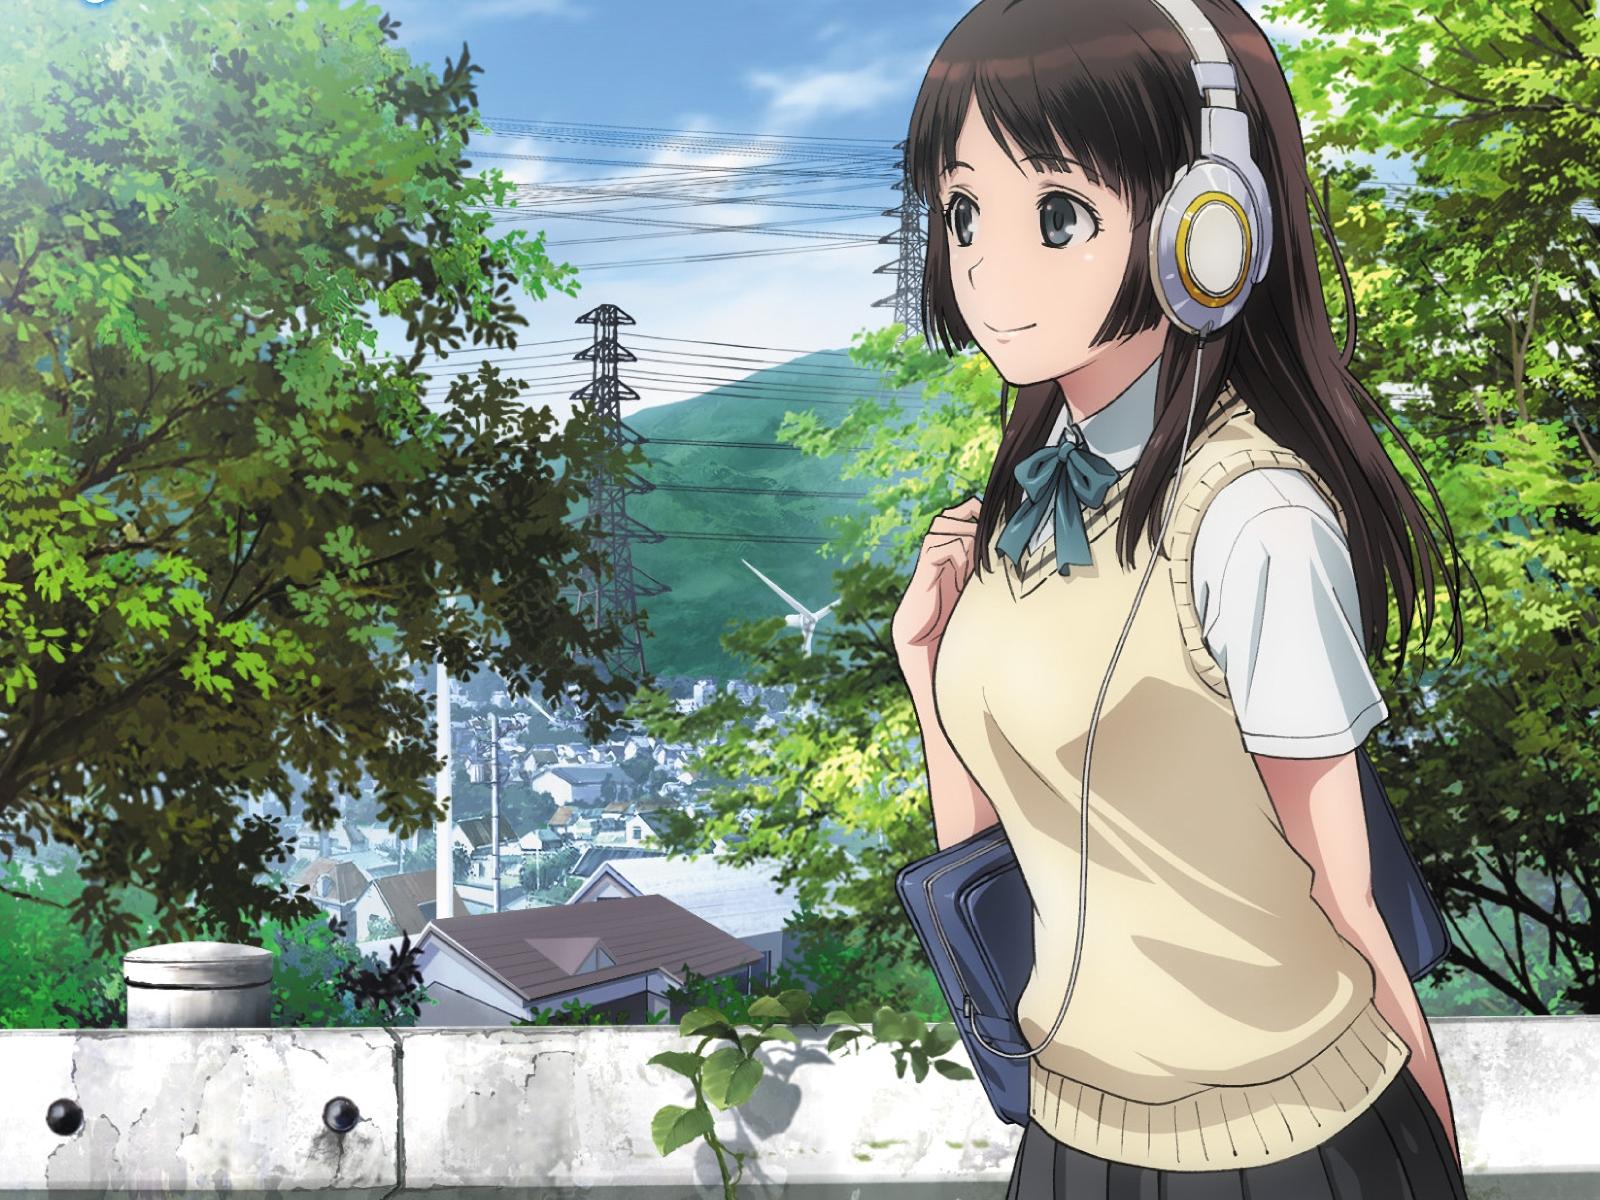 Anime girl listening to music - Show - GameDev.tv